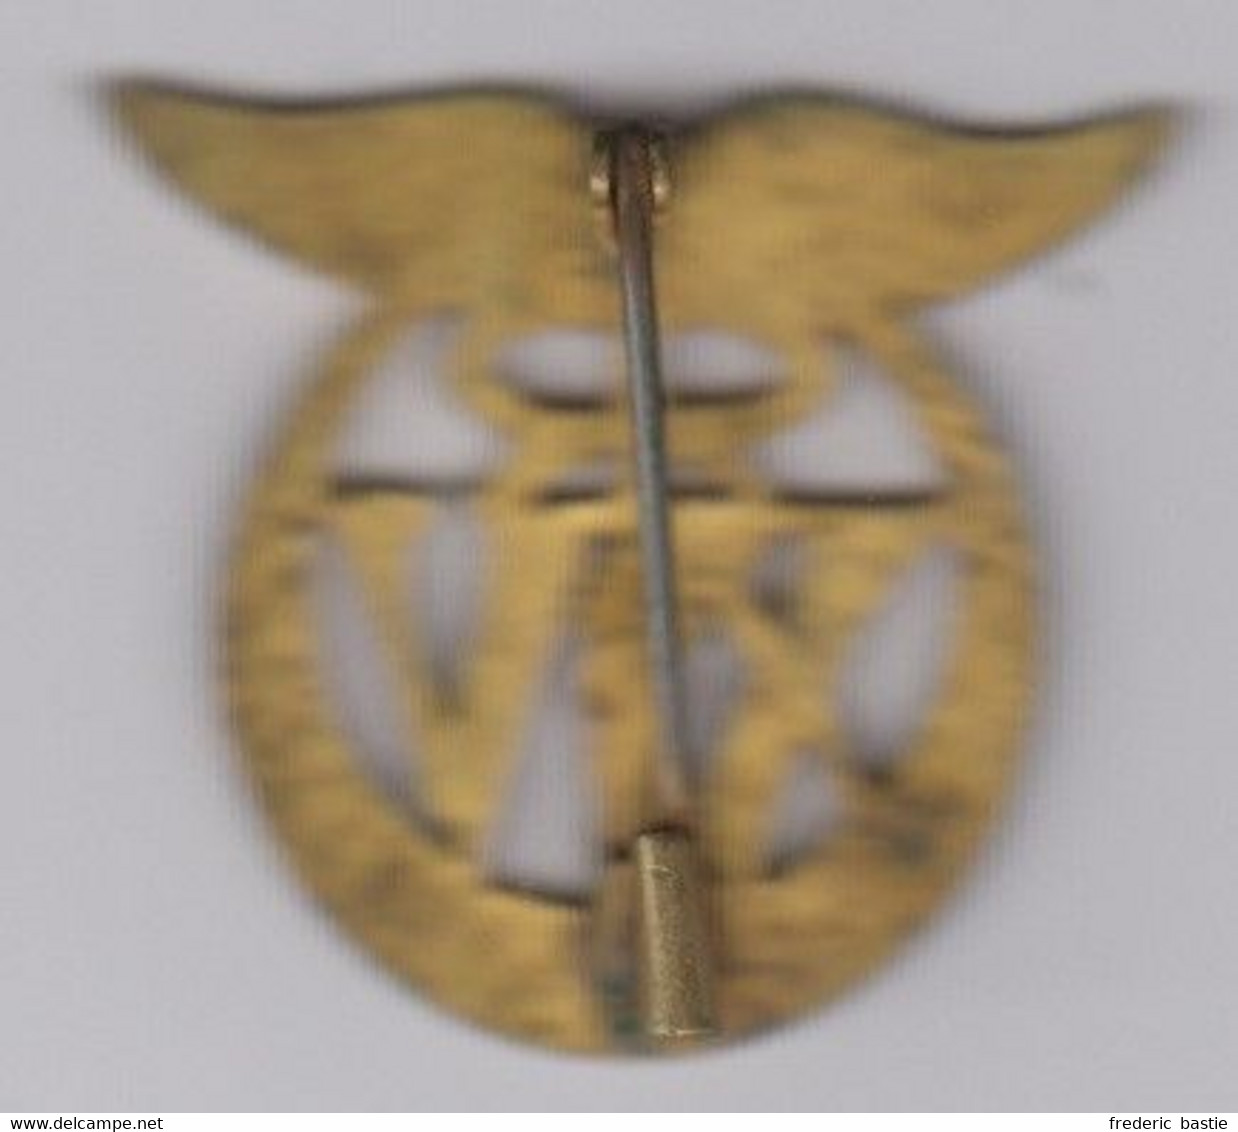 XVe Bataillon Médical  - Insigne Sans Inscriptions Au Dos - Geneeskundige Diensten